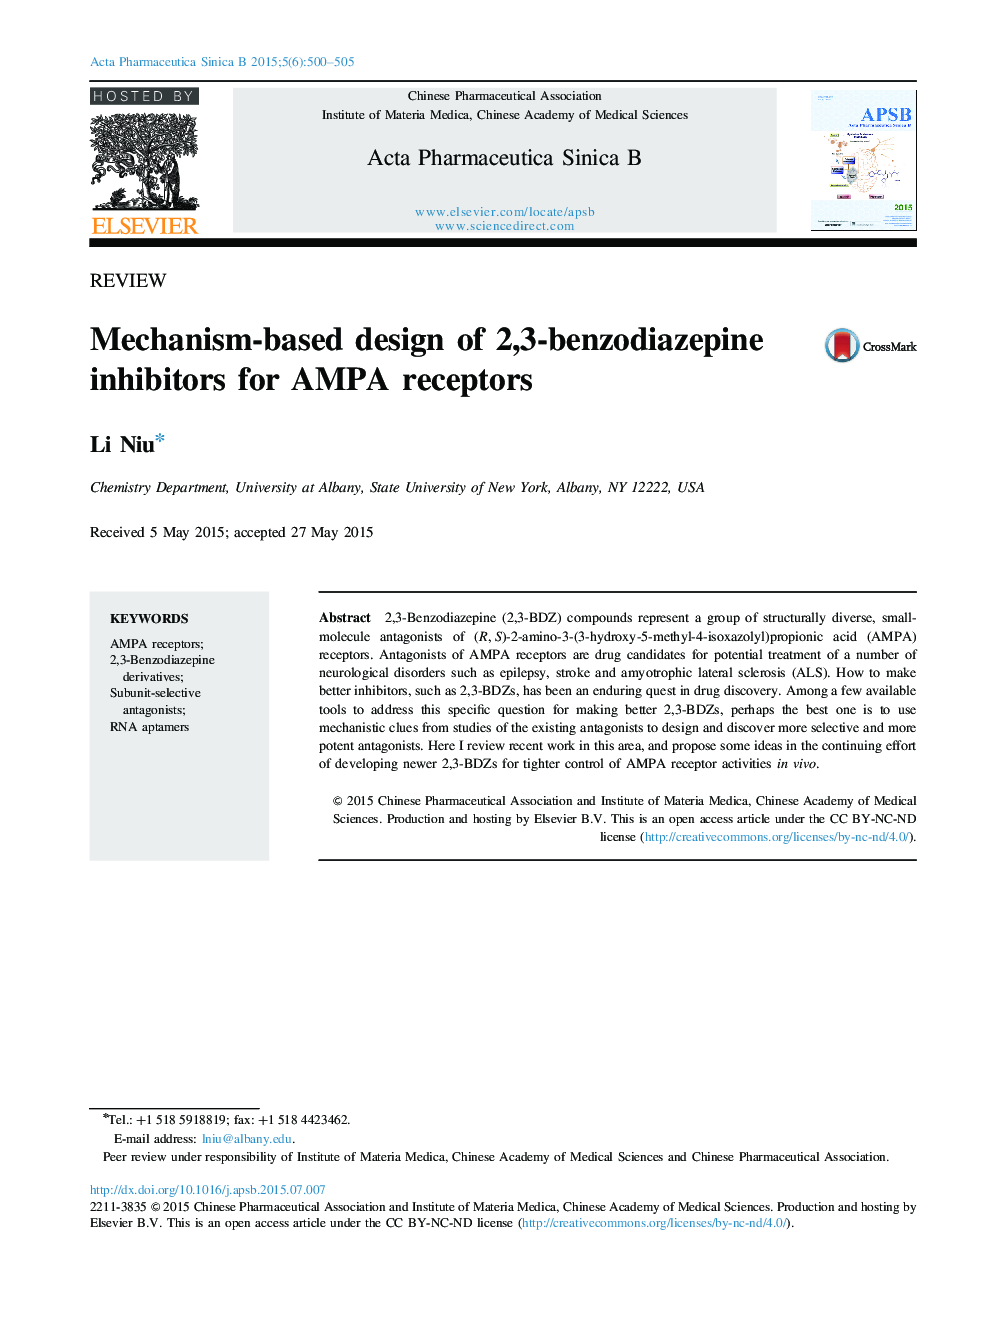 Mechanism-based design of 2,3-benzodiazepine inhibitors for AMPA receptors 